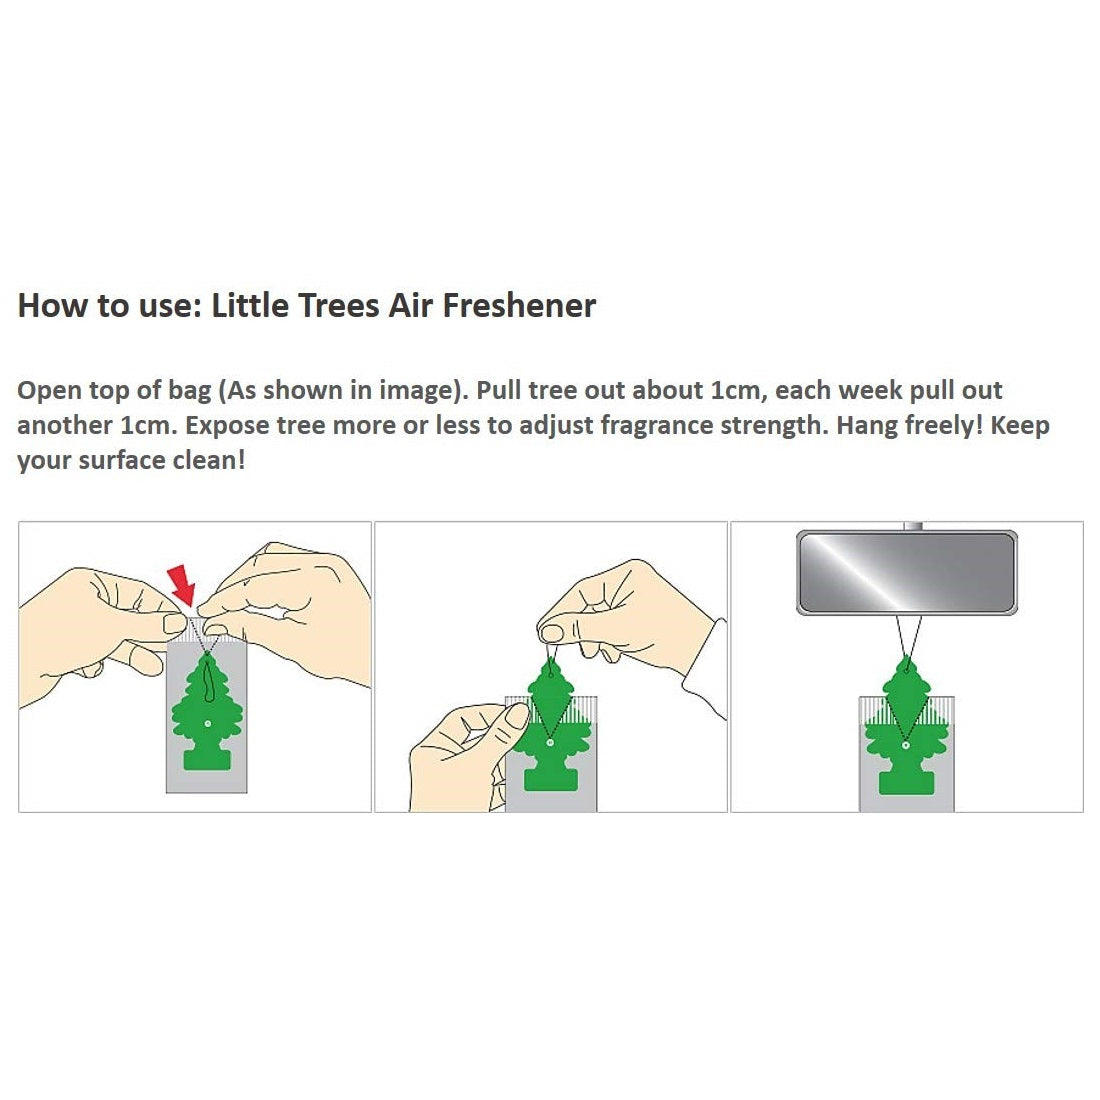 Little Trees Car Air Freshener - Vanillaroma - 3 pieces